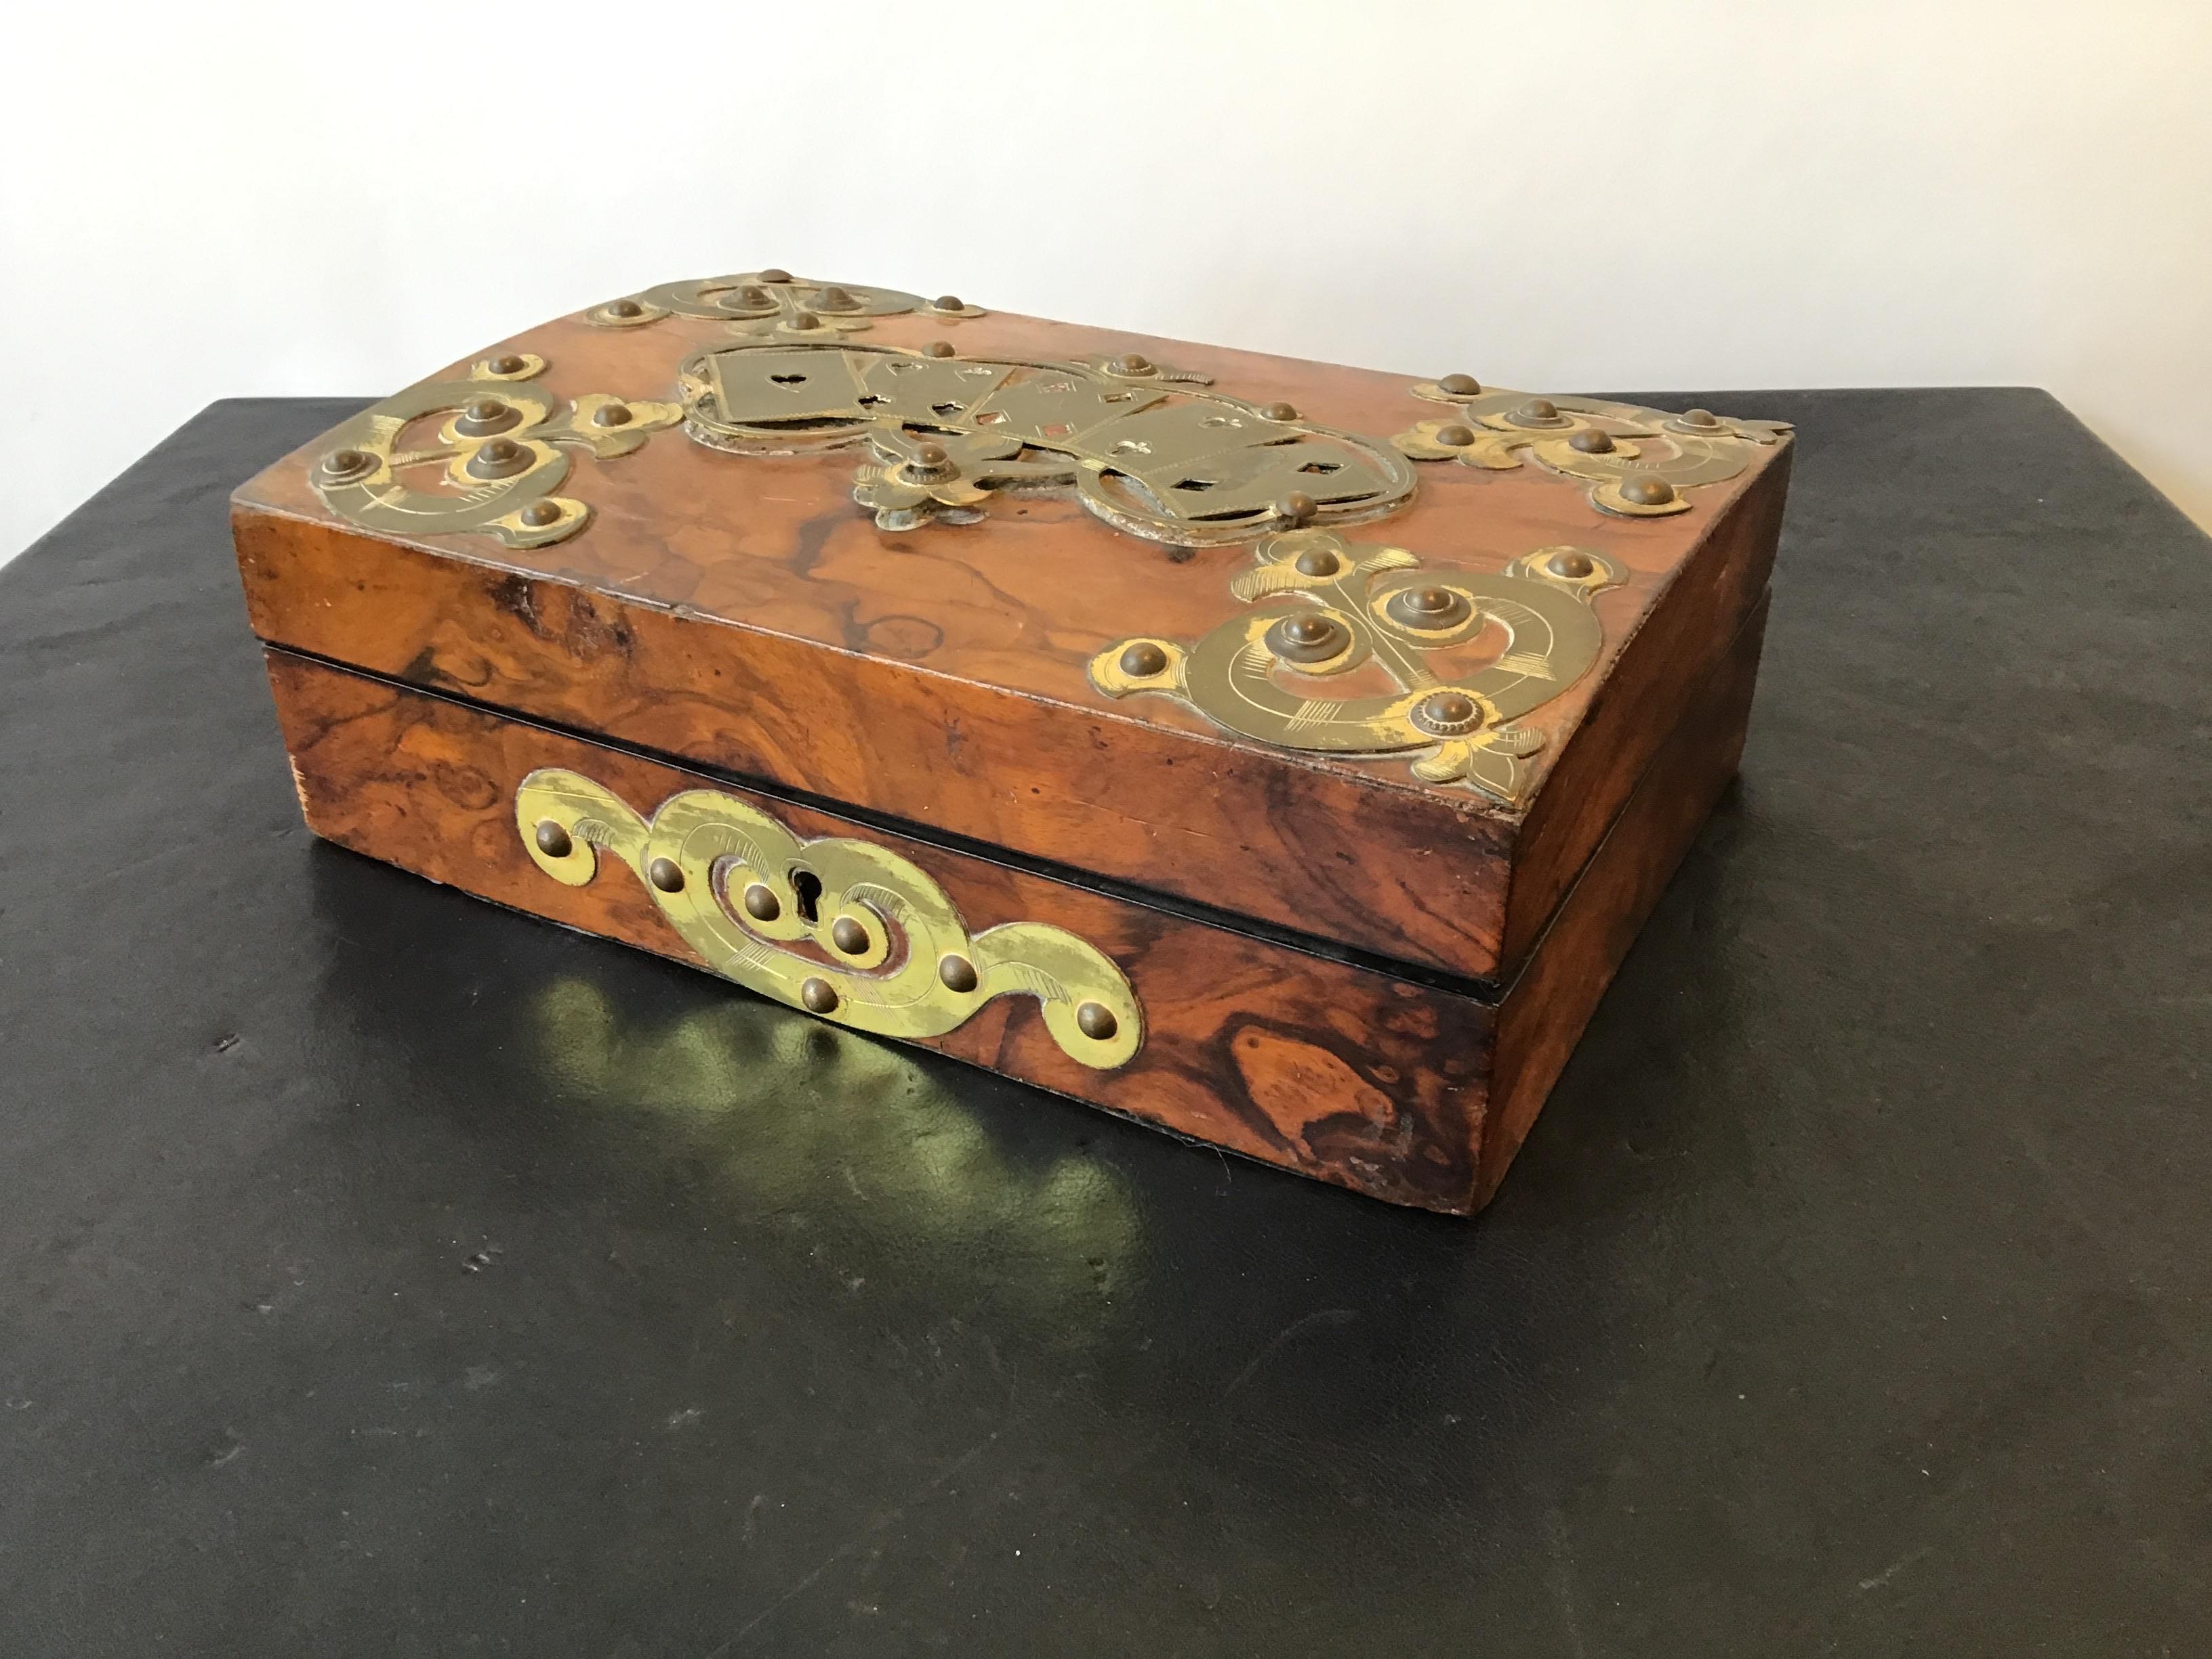 1880s English wood and brass overlay card box.